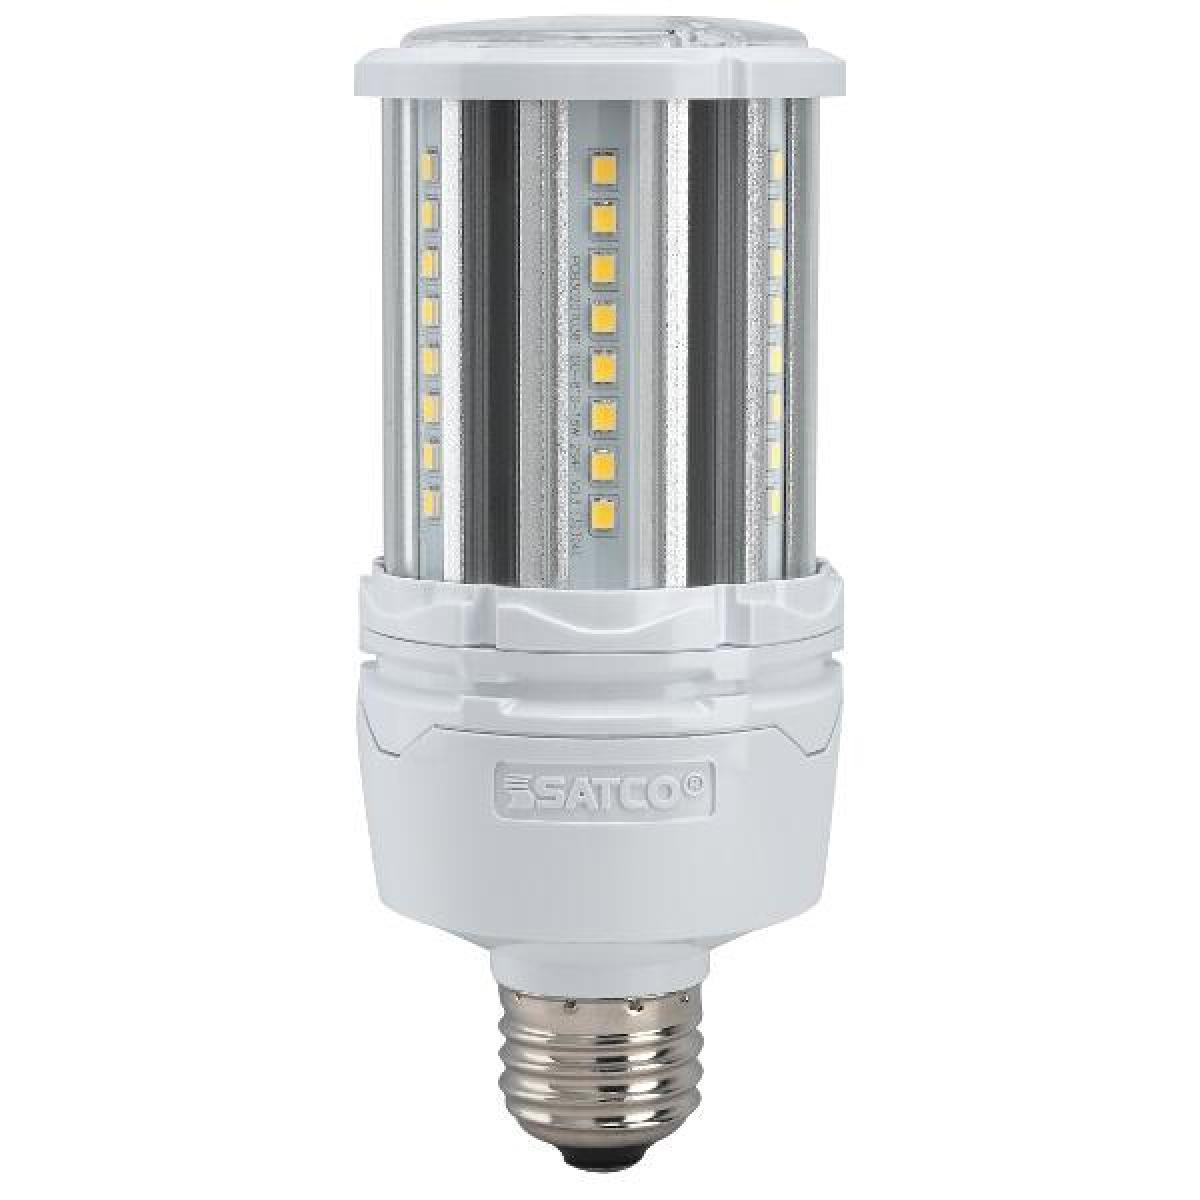 LED Lantern Light Fixture with Mogul Socket